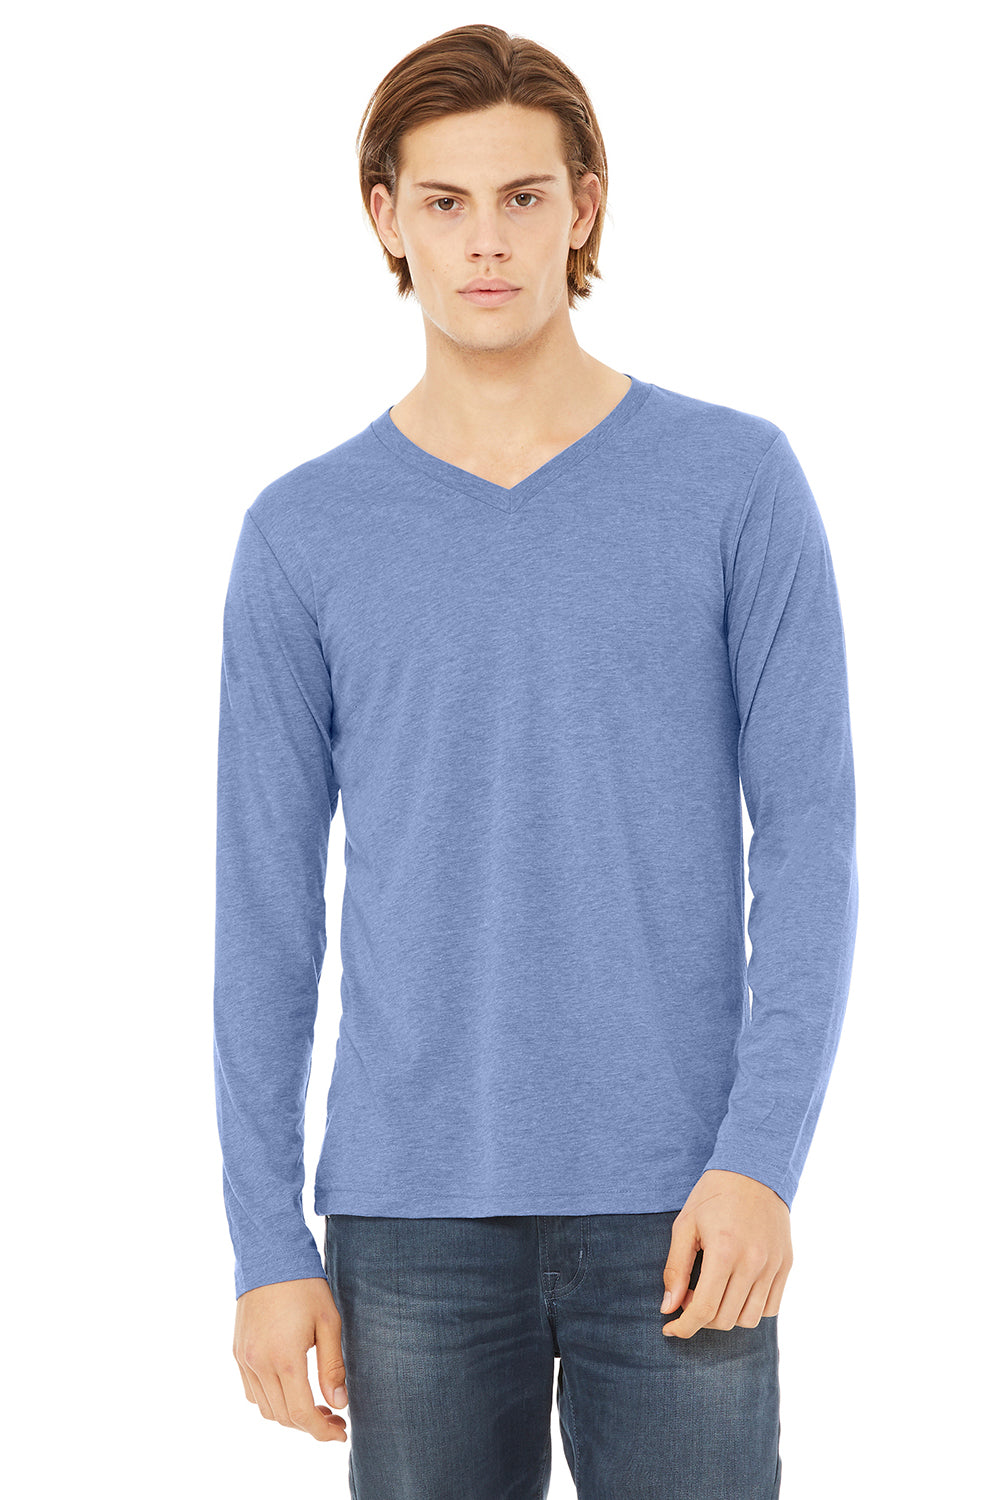 Bella + Canvas 3425 Mens Jersey Long Sleeve V-Neck T-Shirt Blue Front